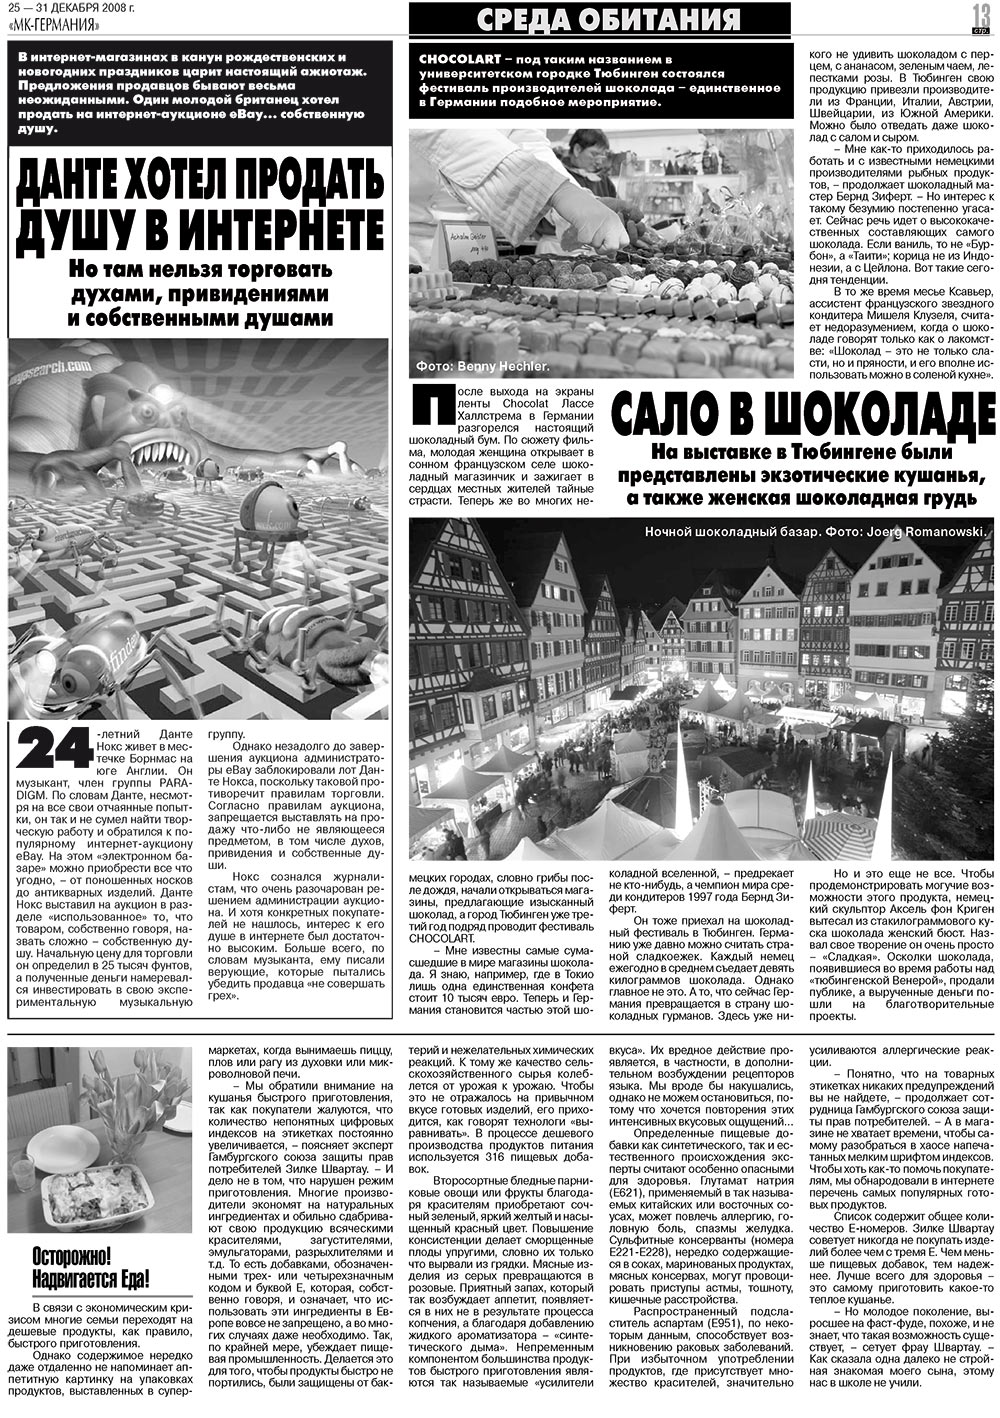 МК-Германия, газета. 2008 №52 стр.13